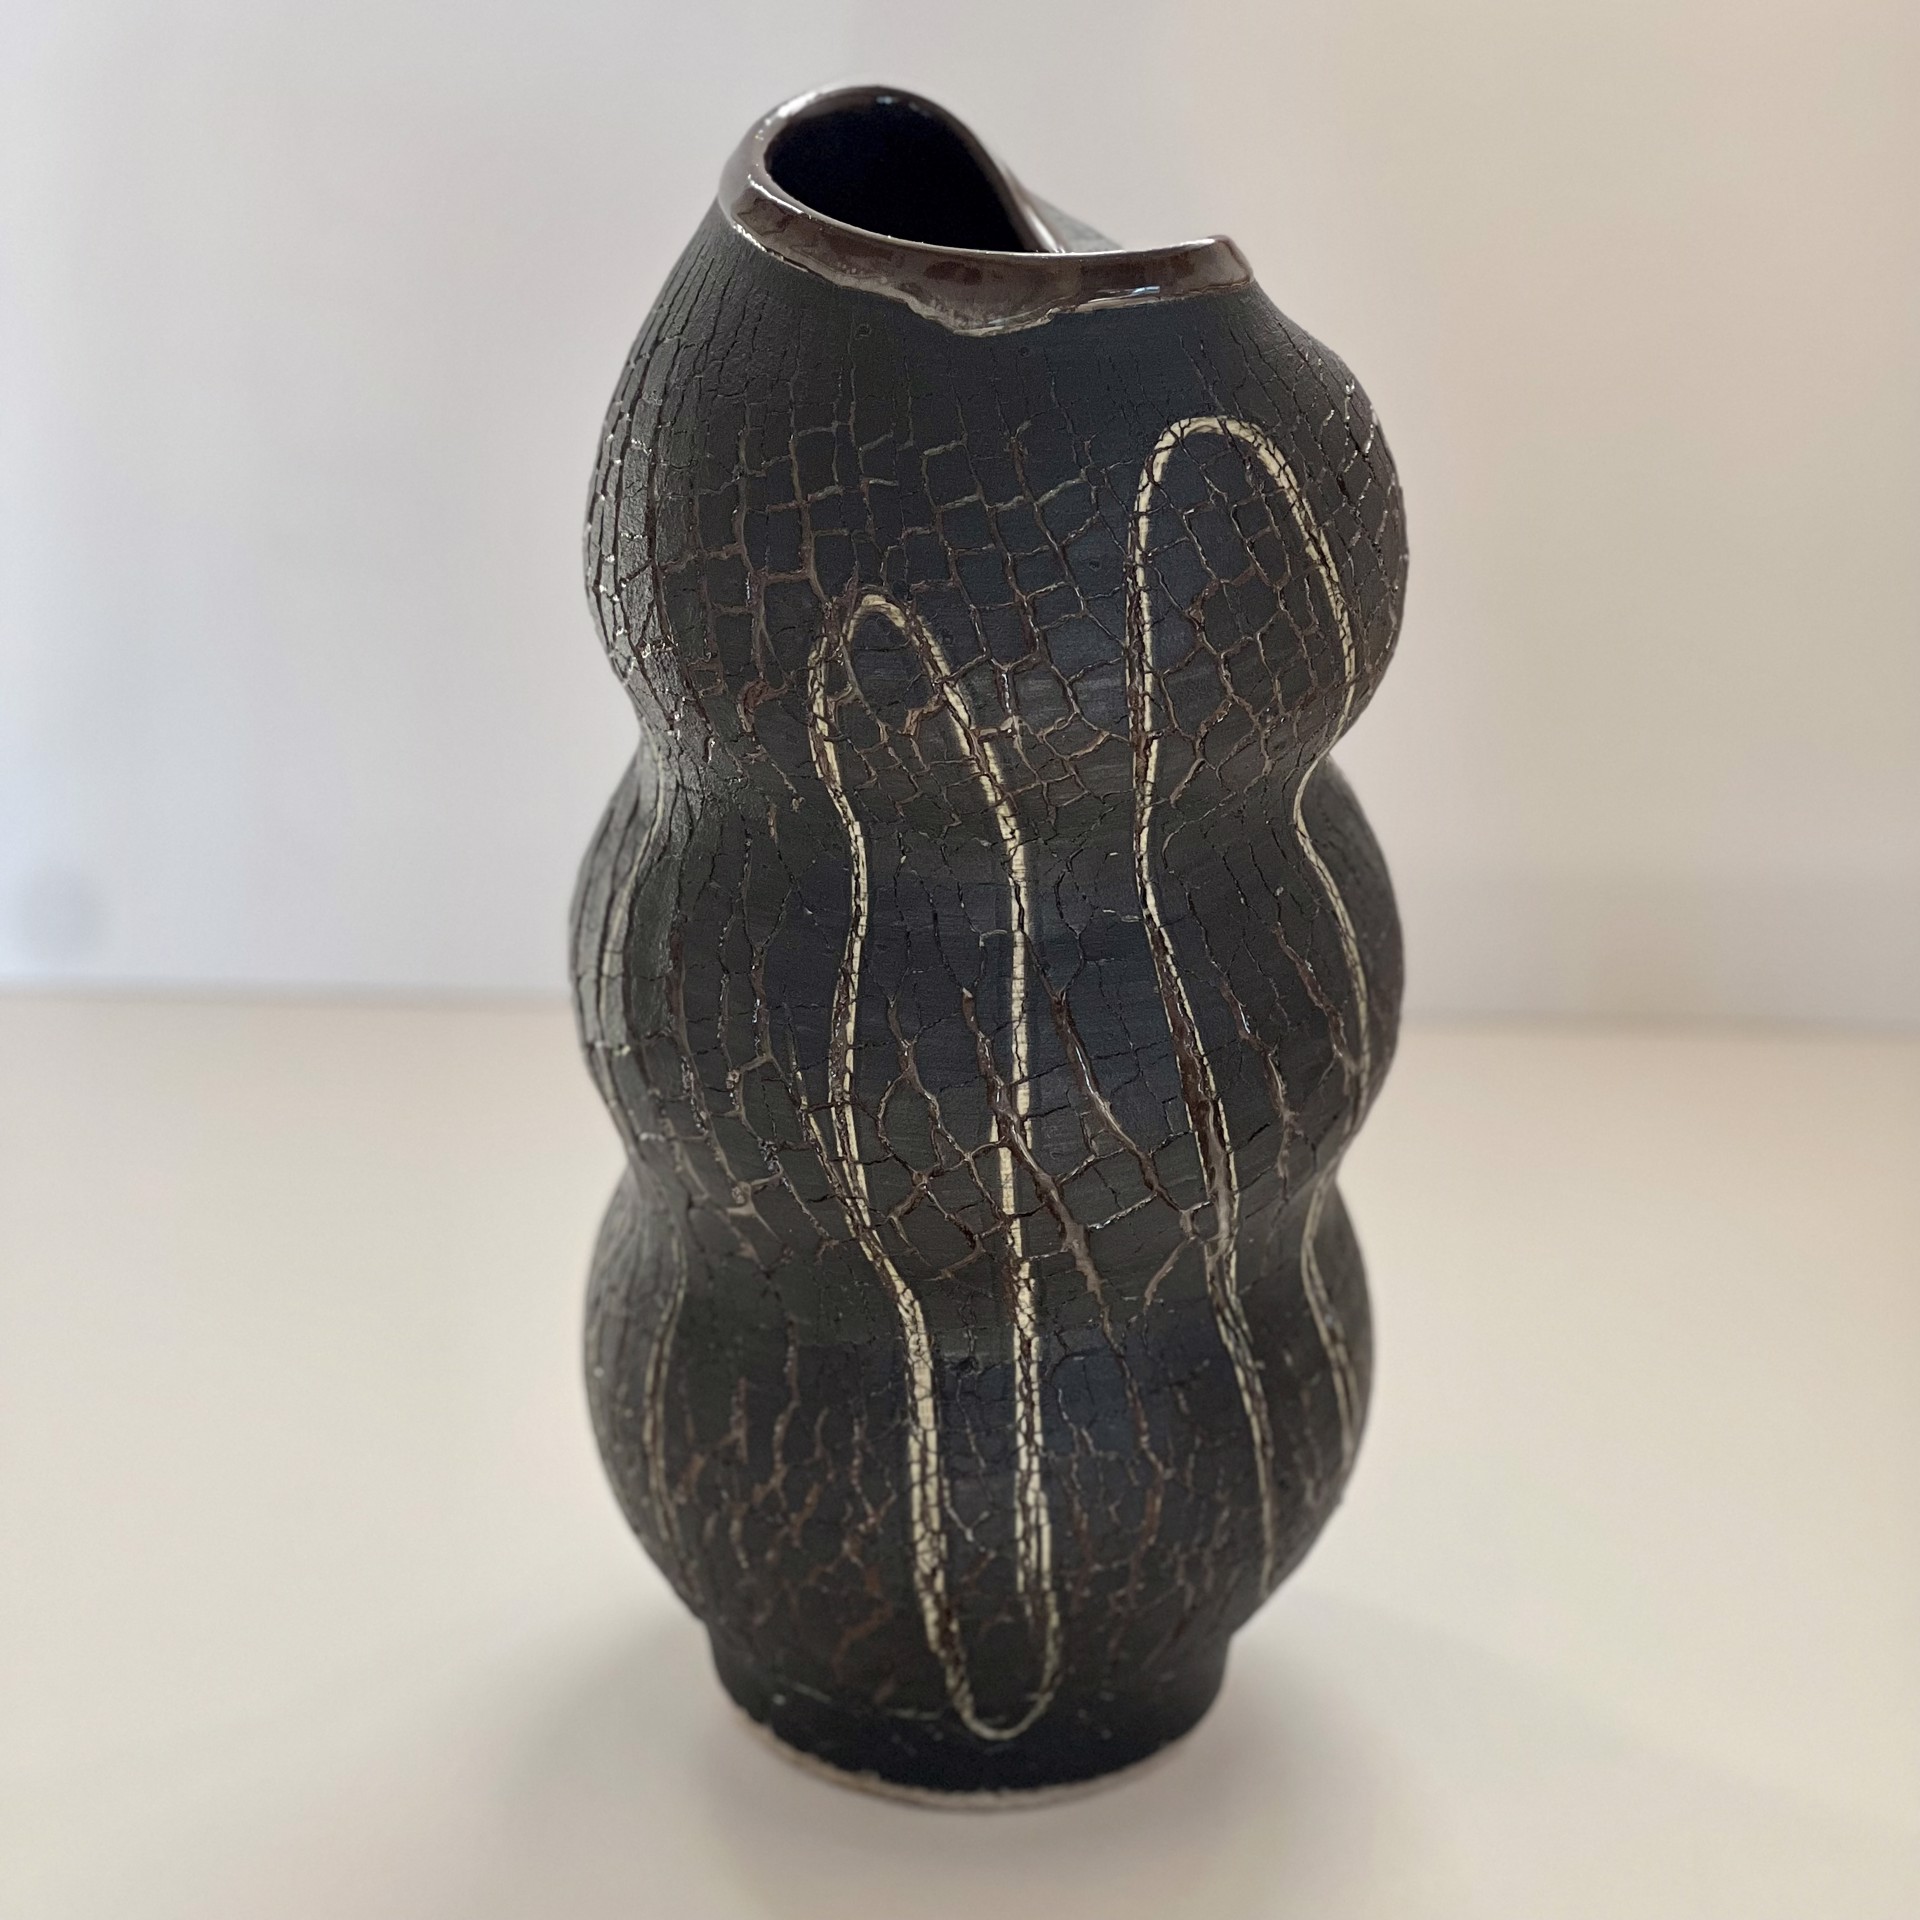 Vase 3 by David LaLomia